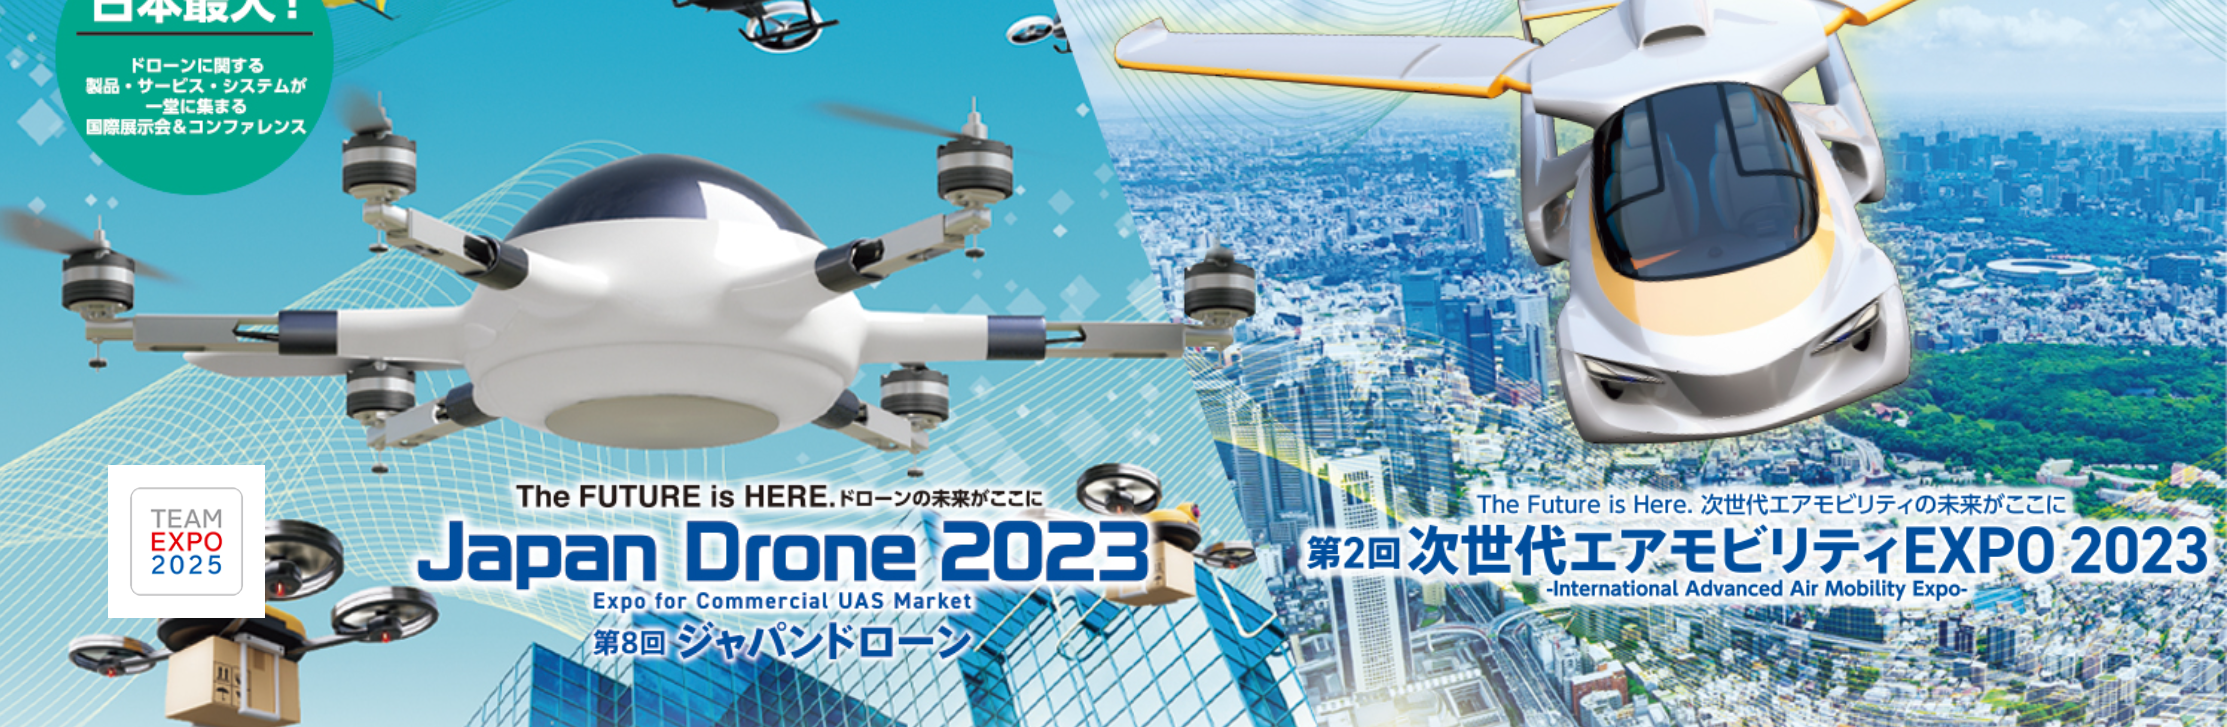 Japan Drone2023